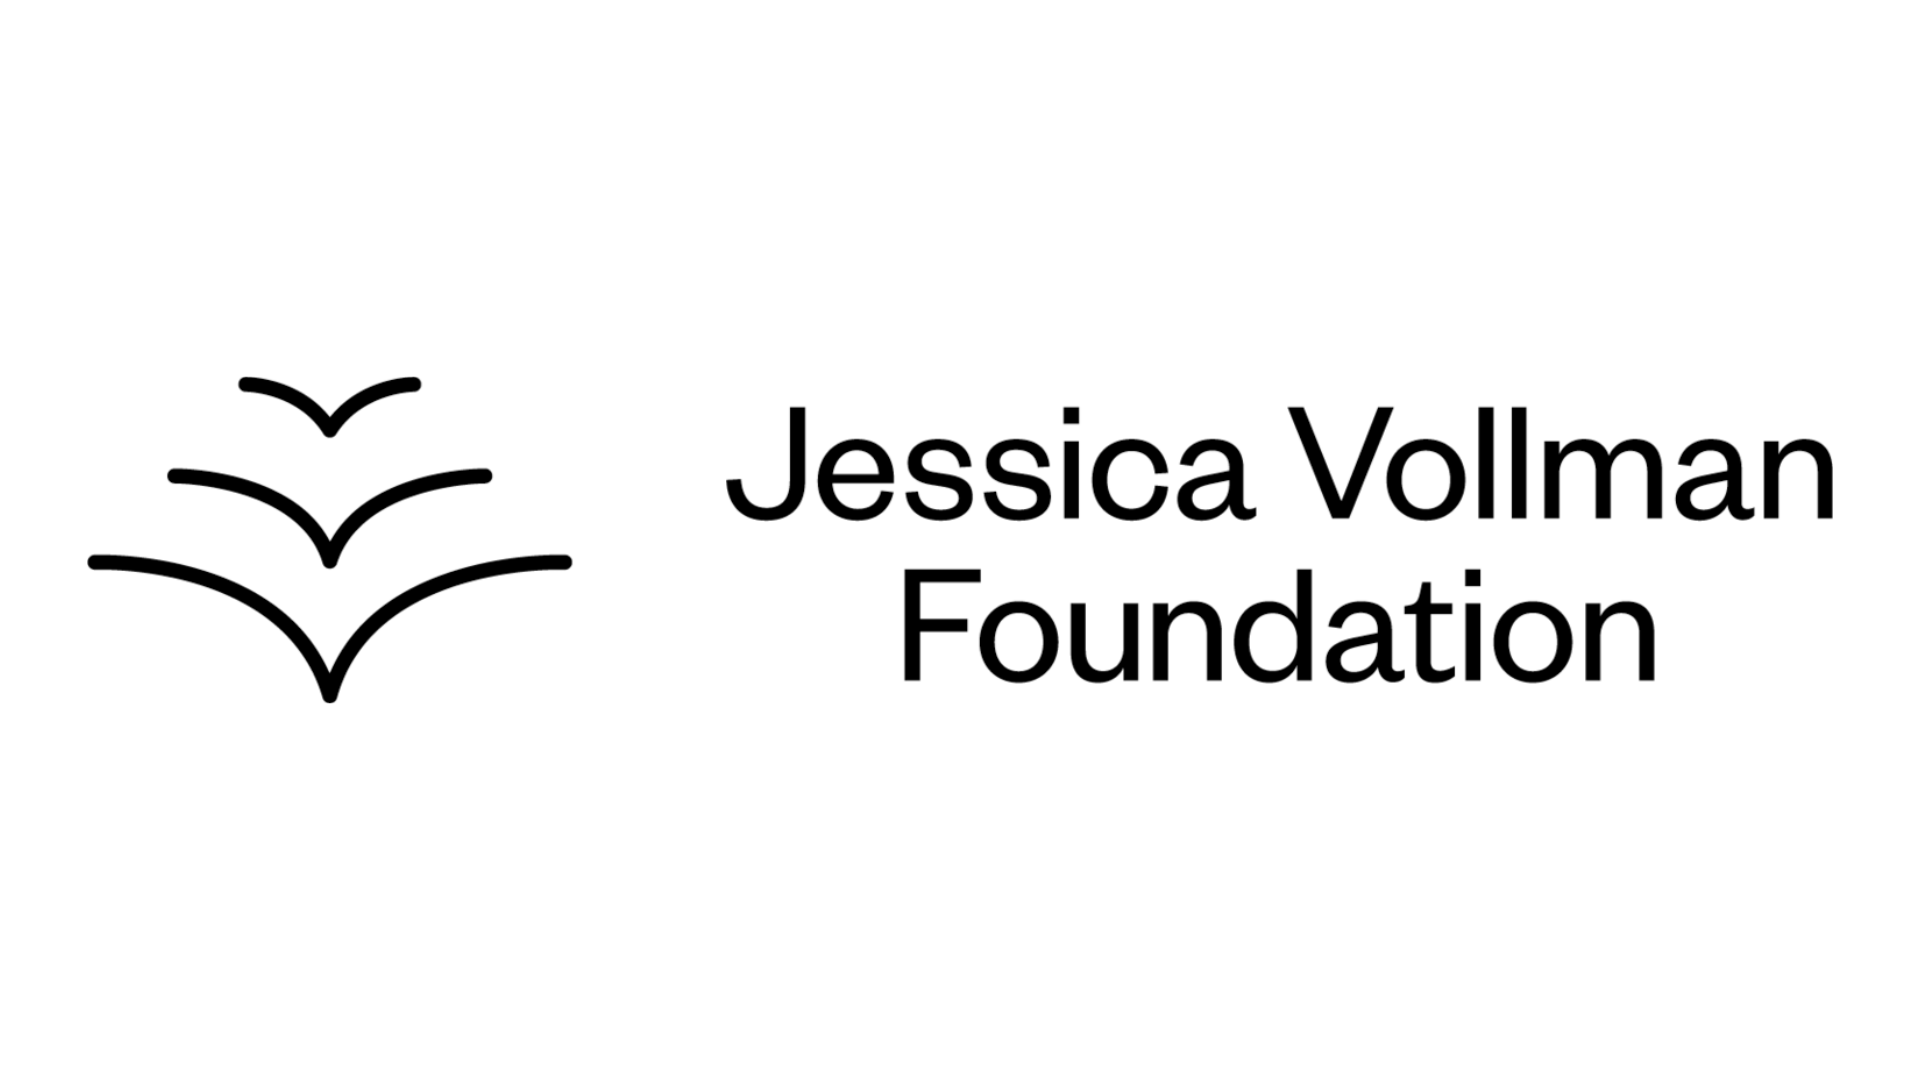 Jessica Vollman Foundation logo